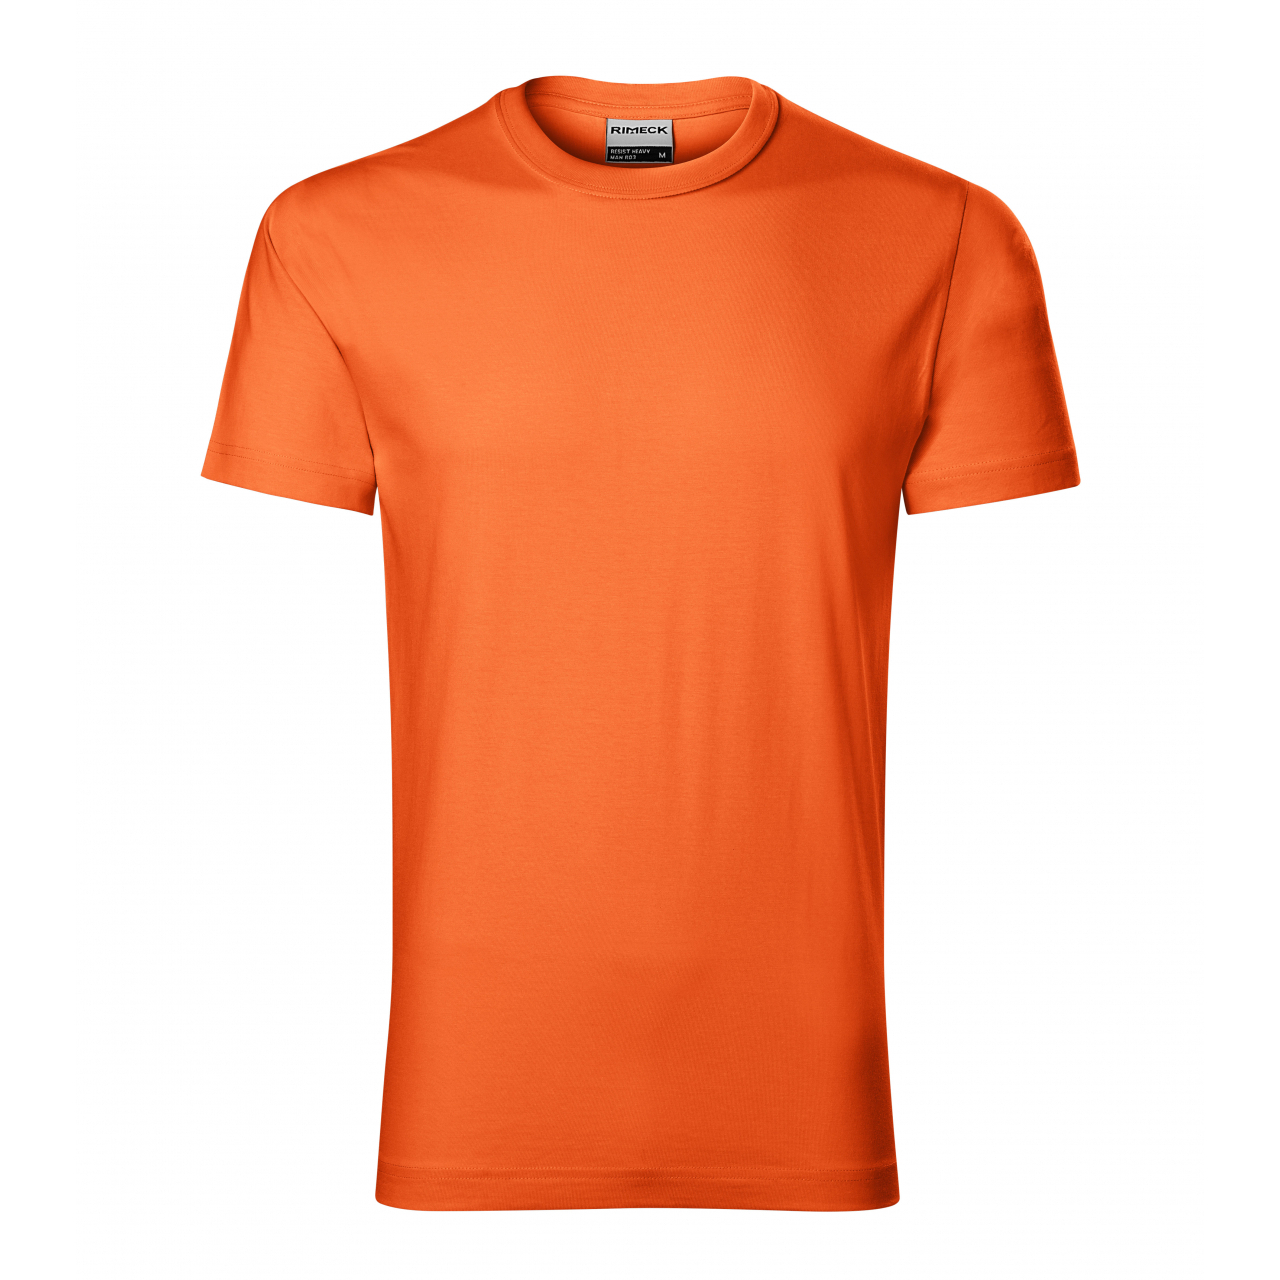 Tričko pánské Rimeck Resist Heavy - oranžové, XL